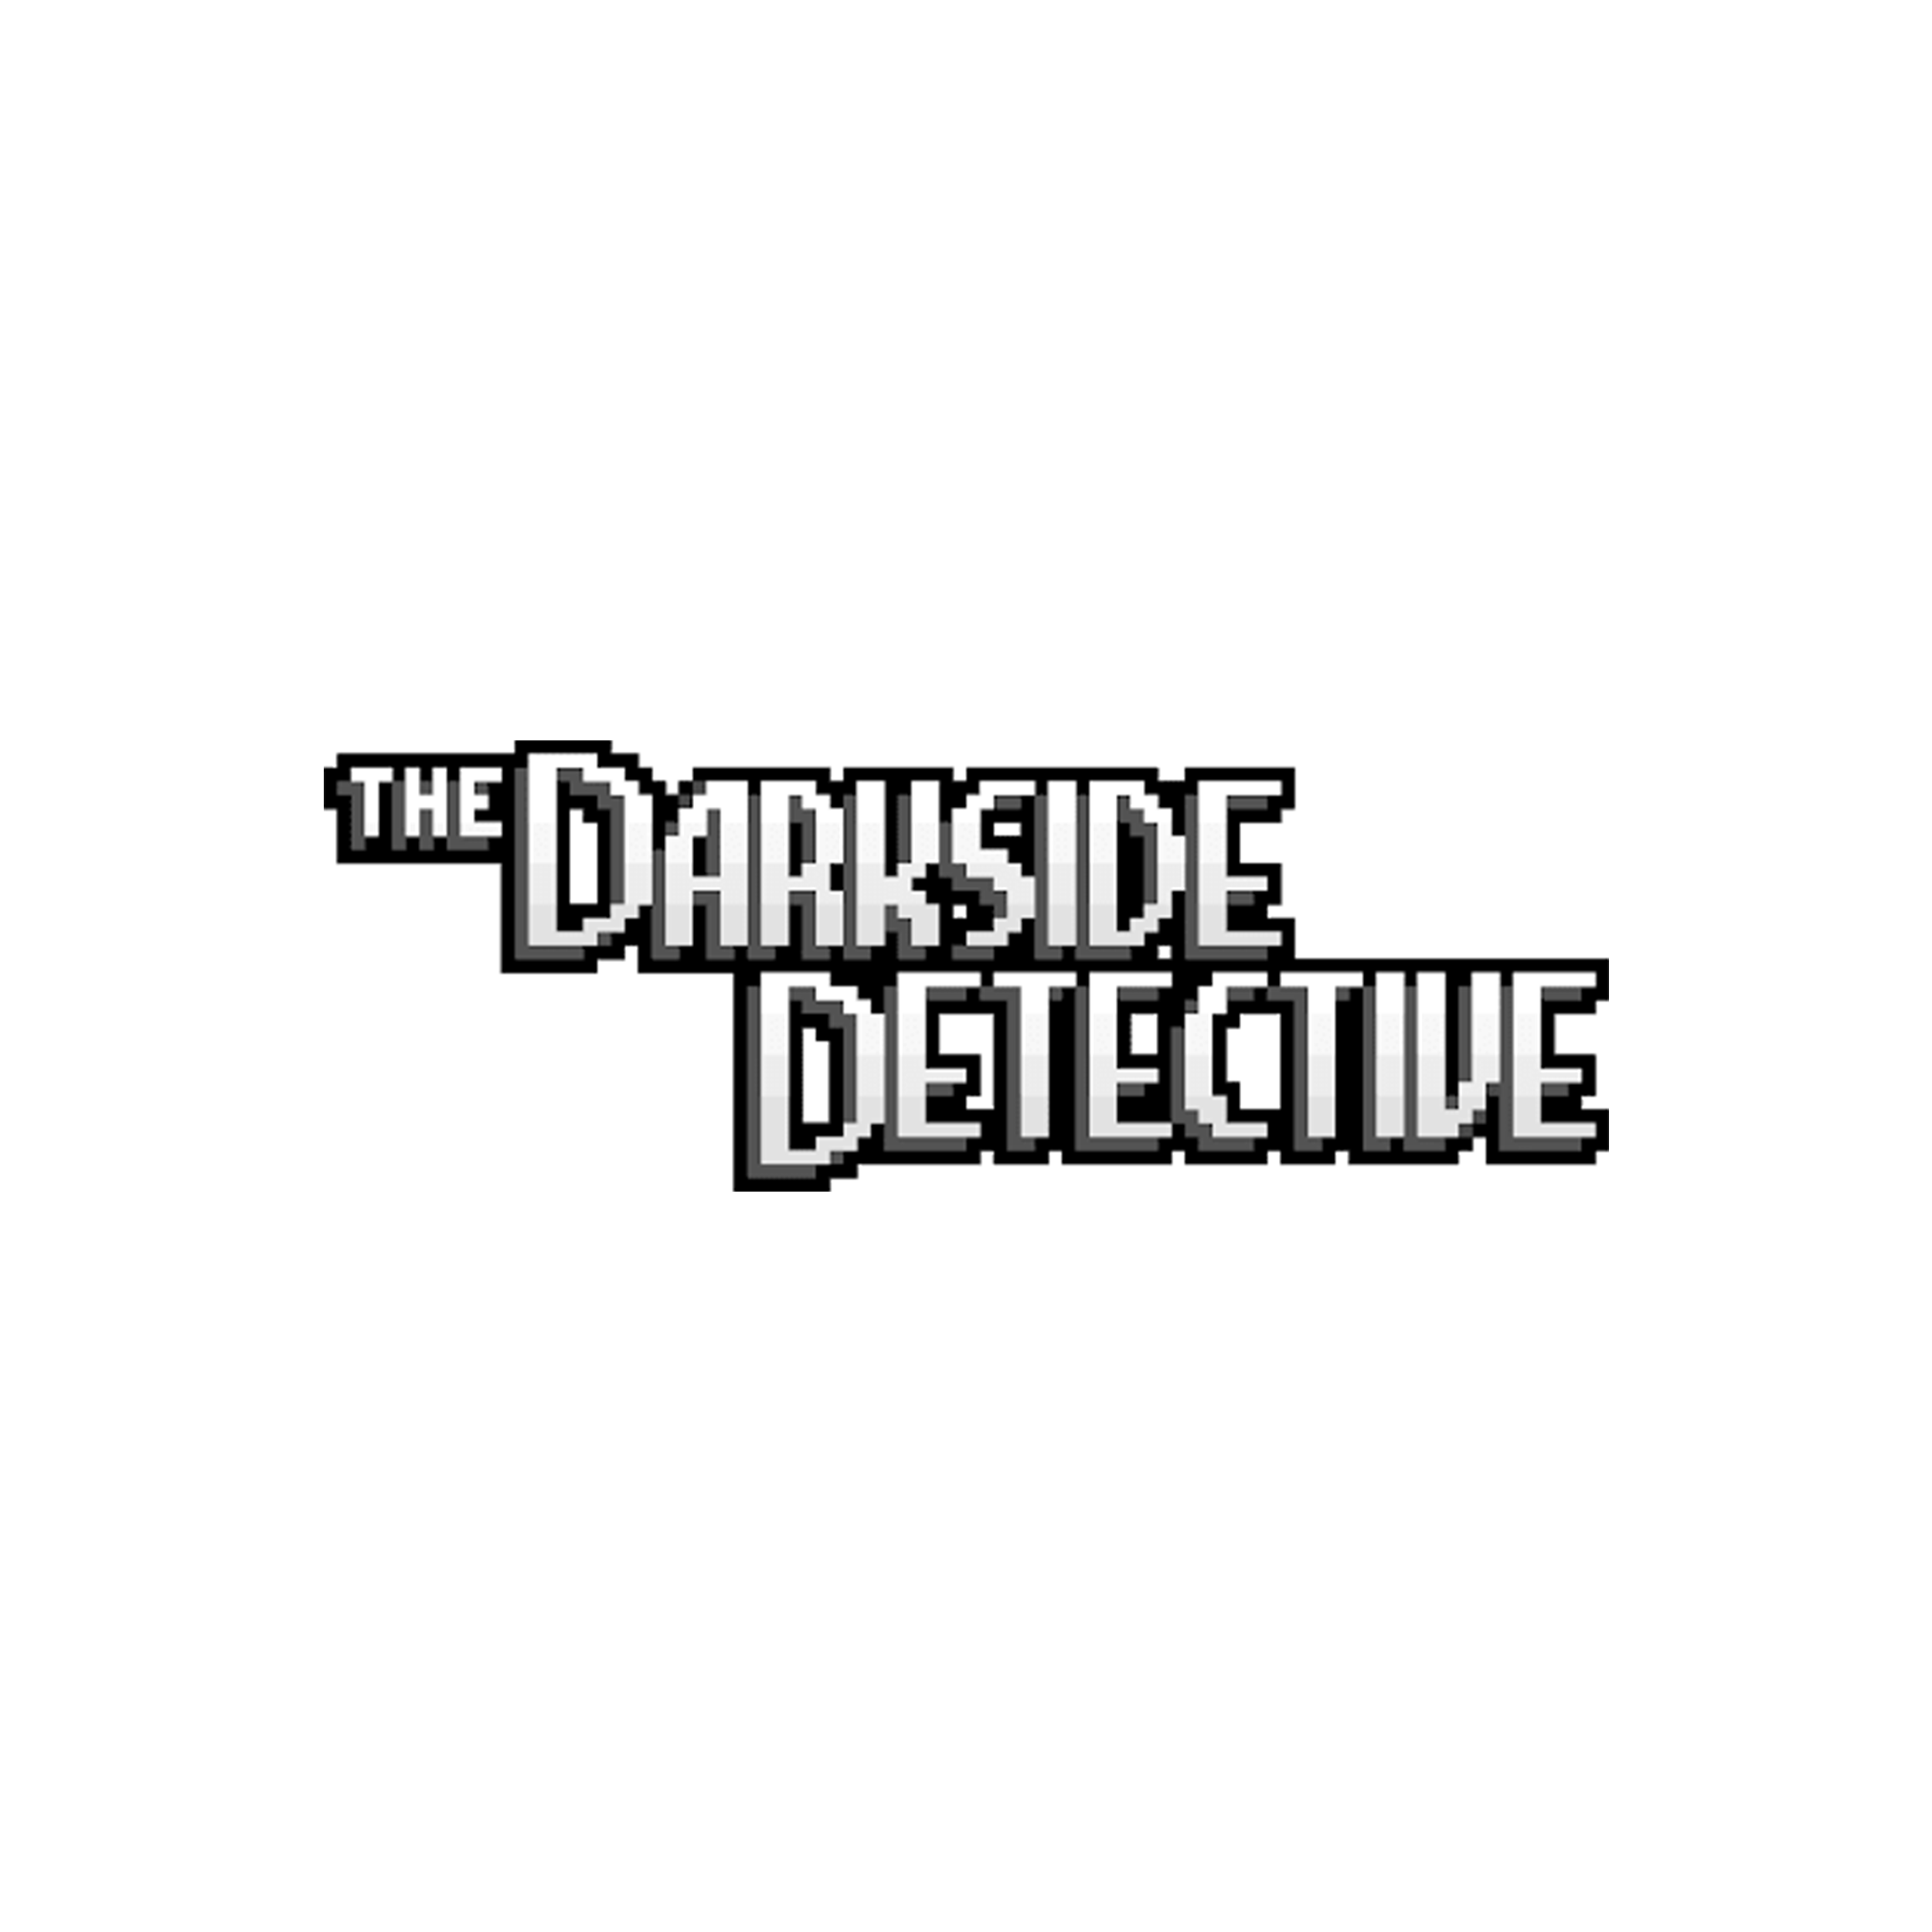 The Darkside Detective logo